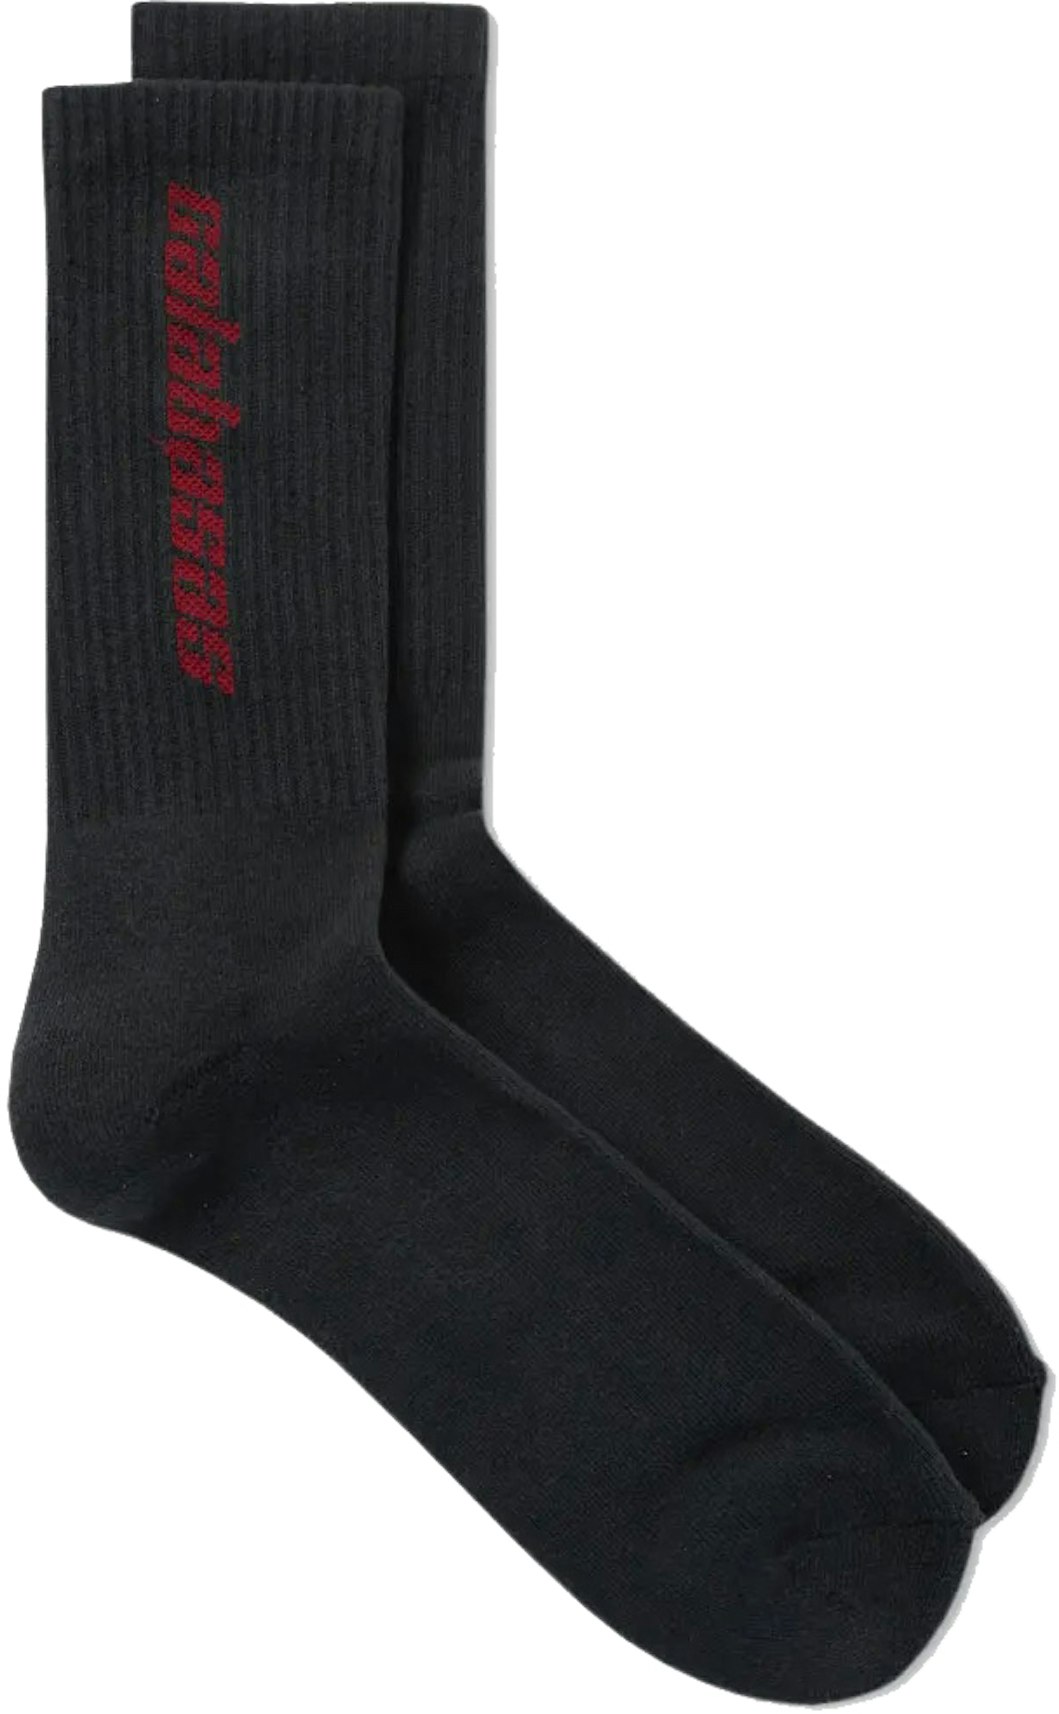 Yeezy Season Calabasas Socks Men's - US